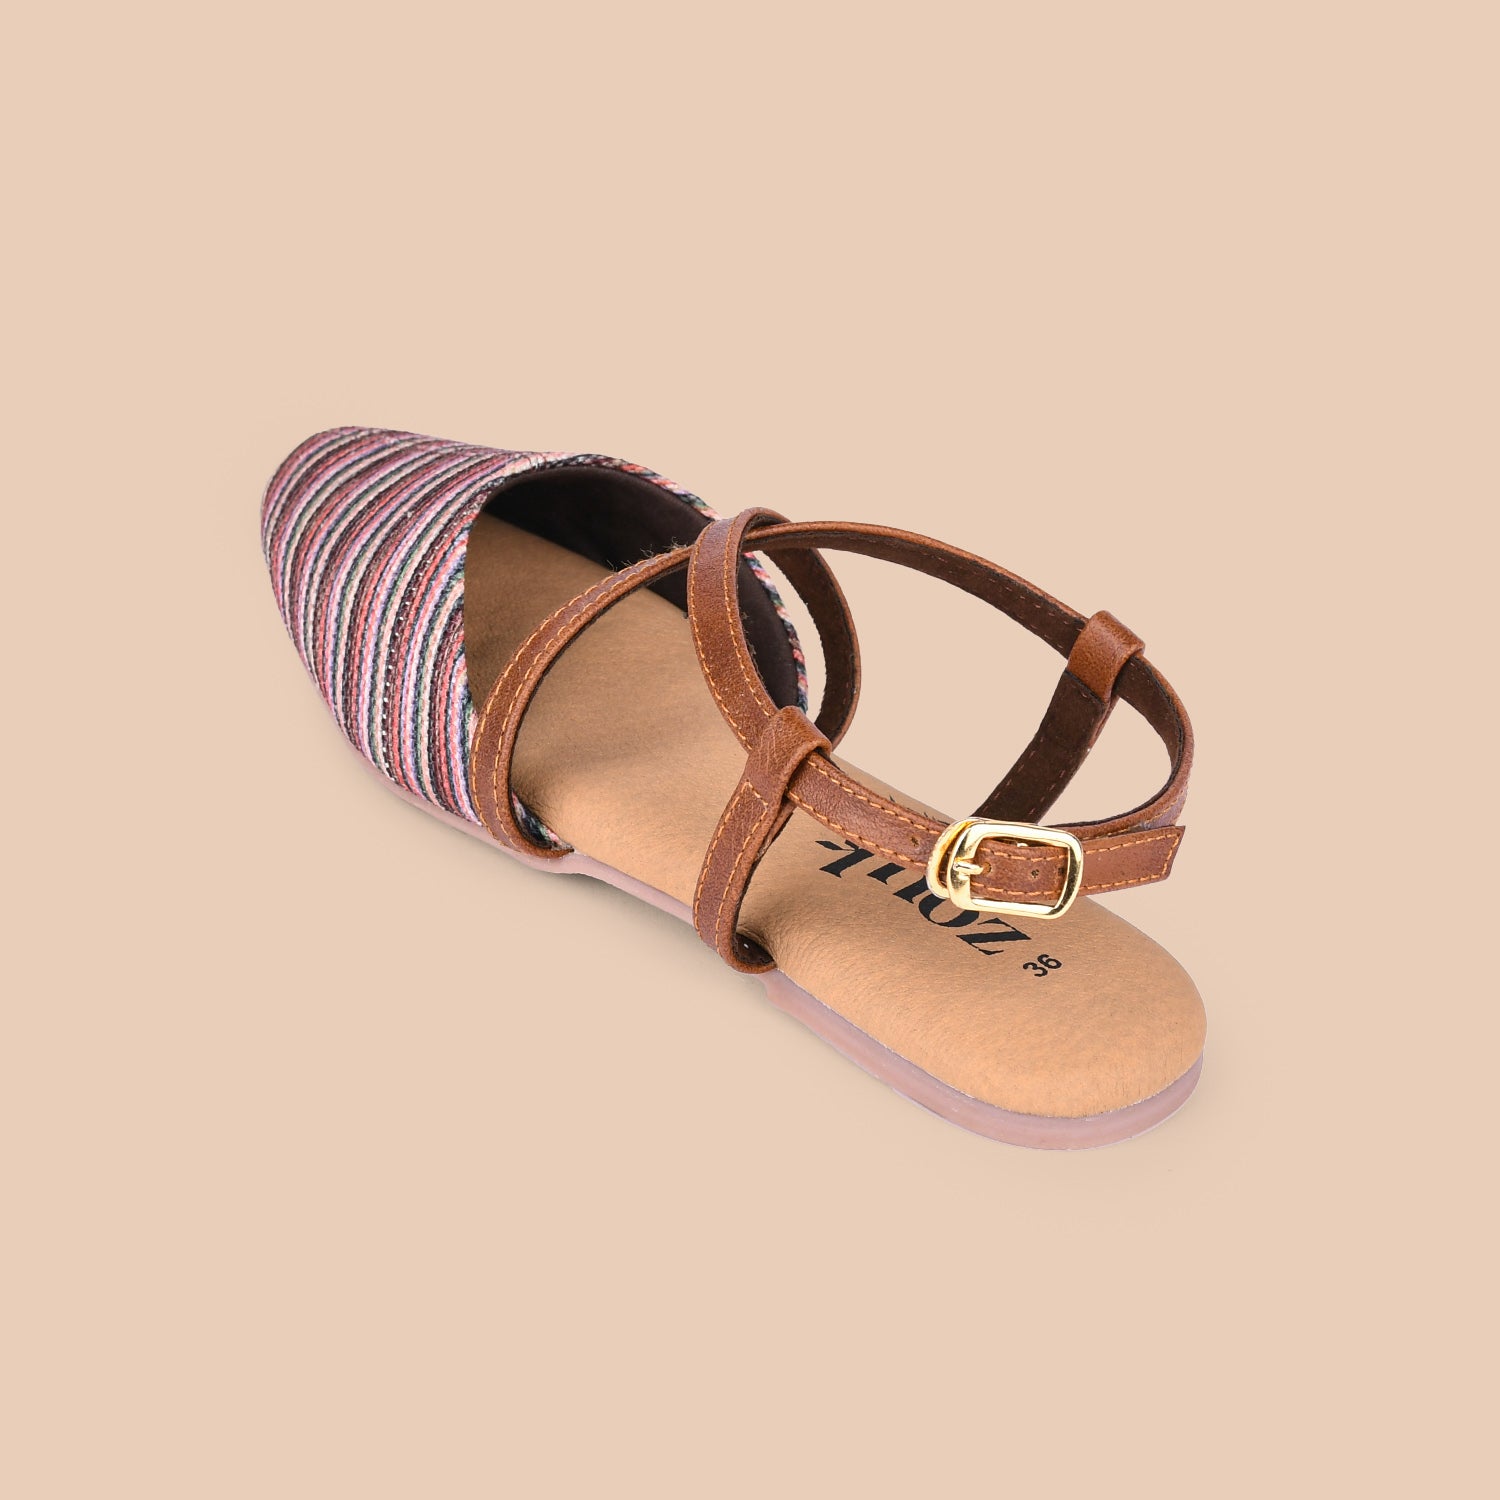 Rohtang Stripes Gladiator Sandals